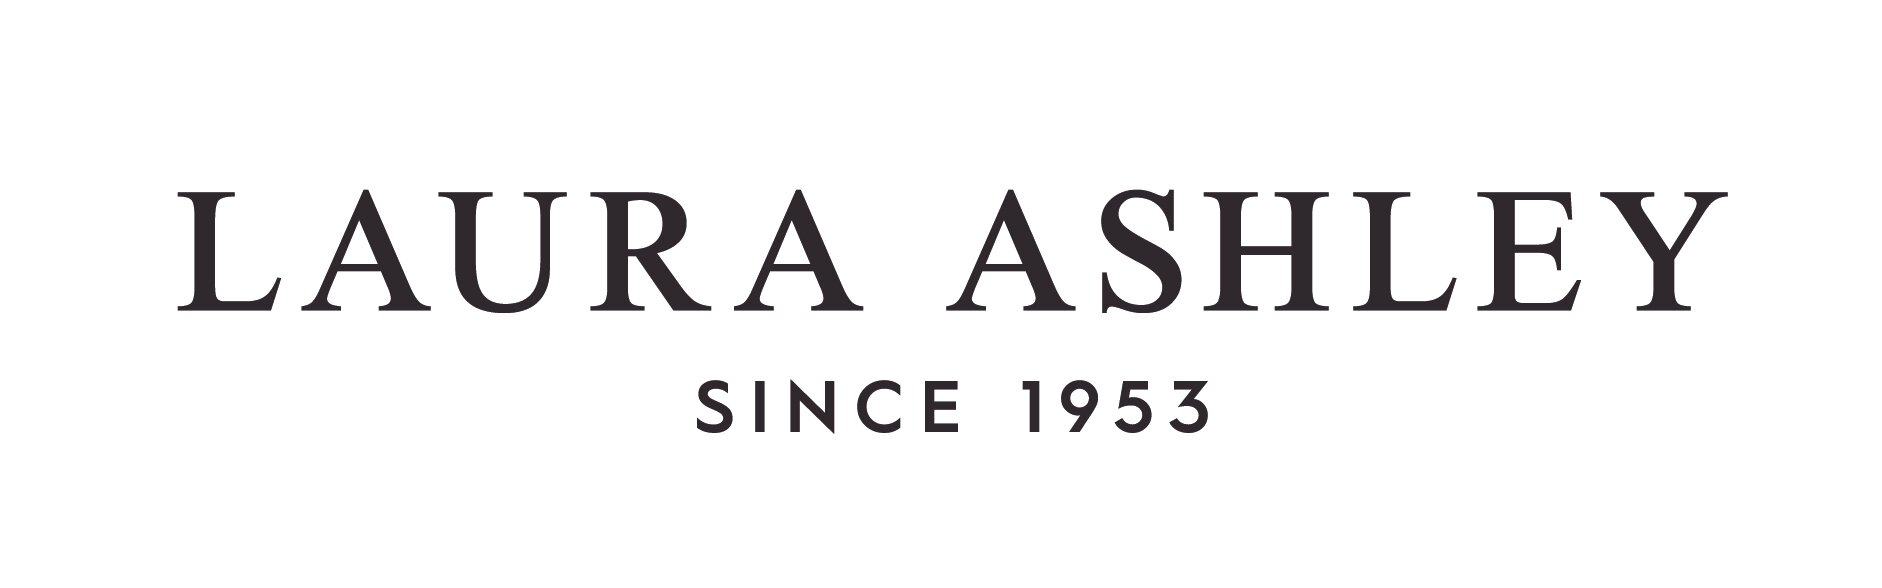 Laura Ashley Logo-01.jpg